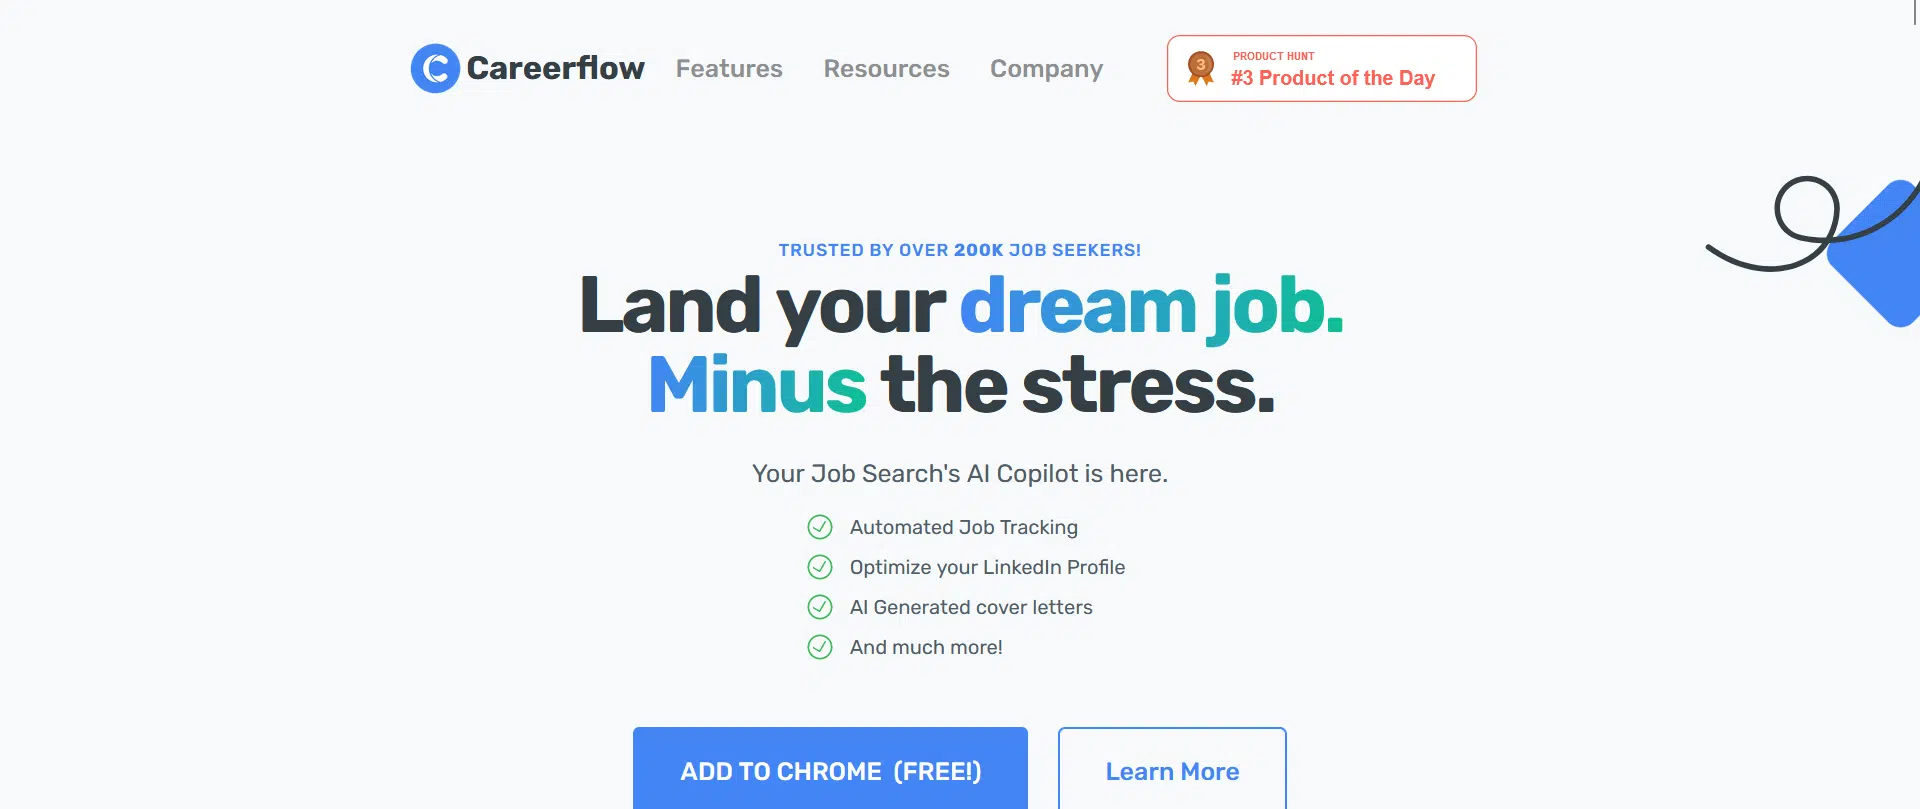 Careerflowwebsite picture